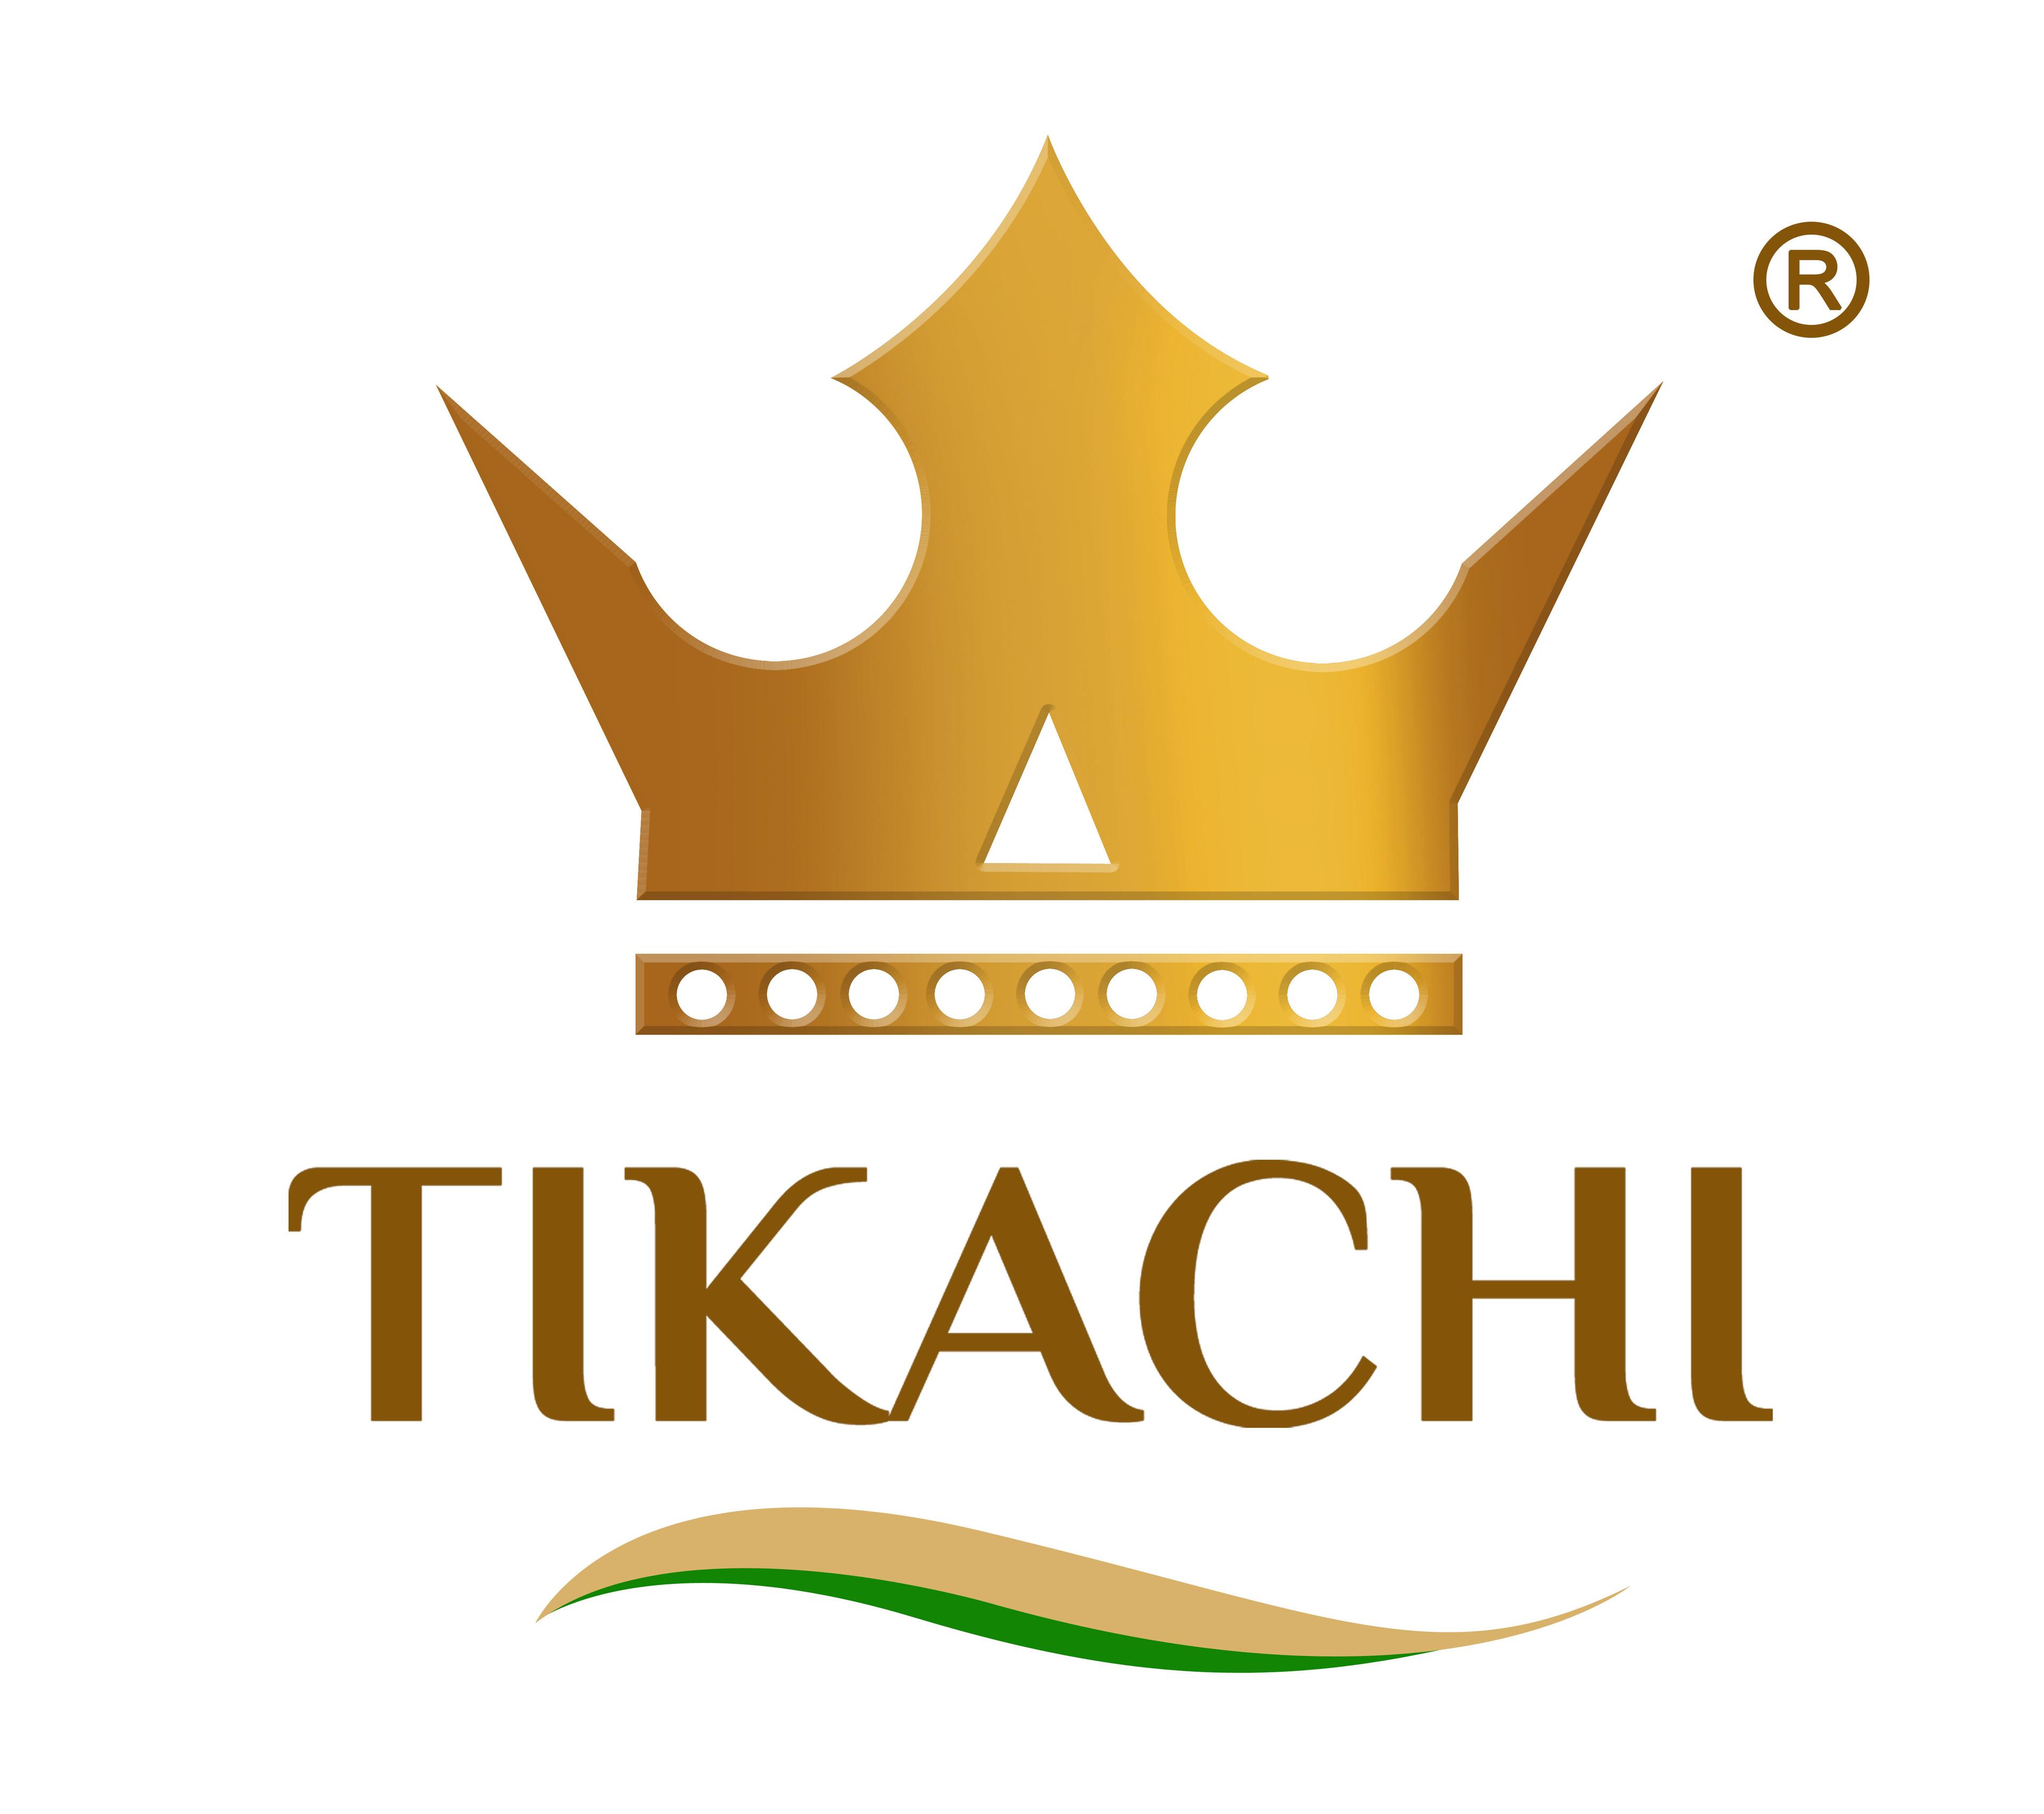 Tikachi Spices